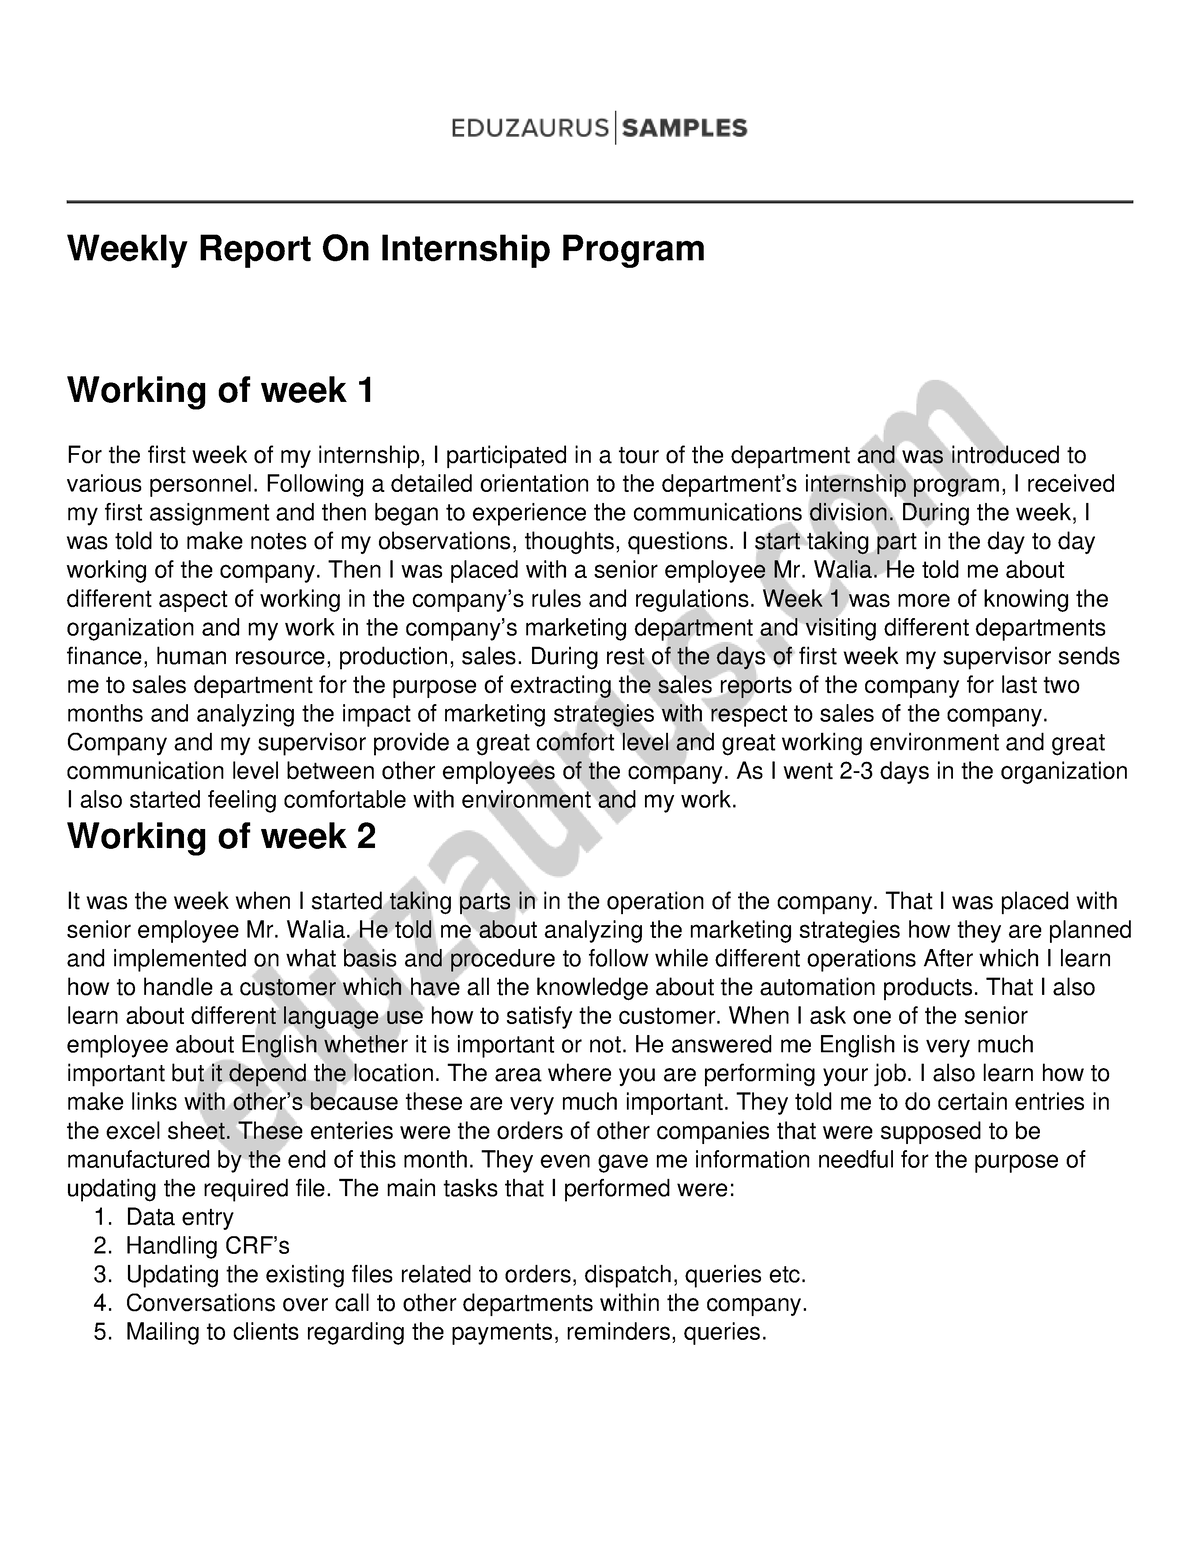 literature review in internship report